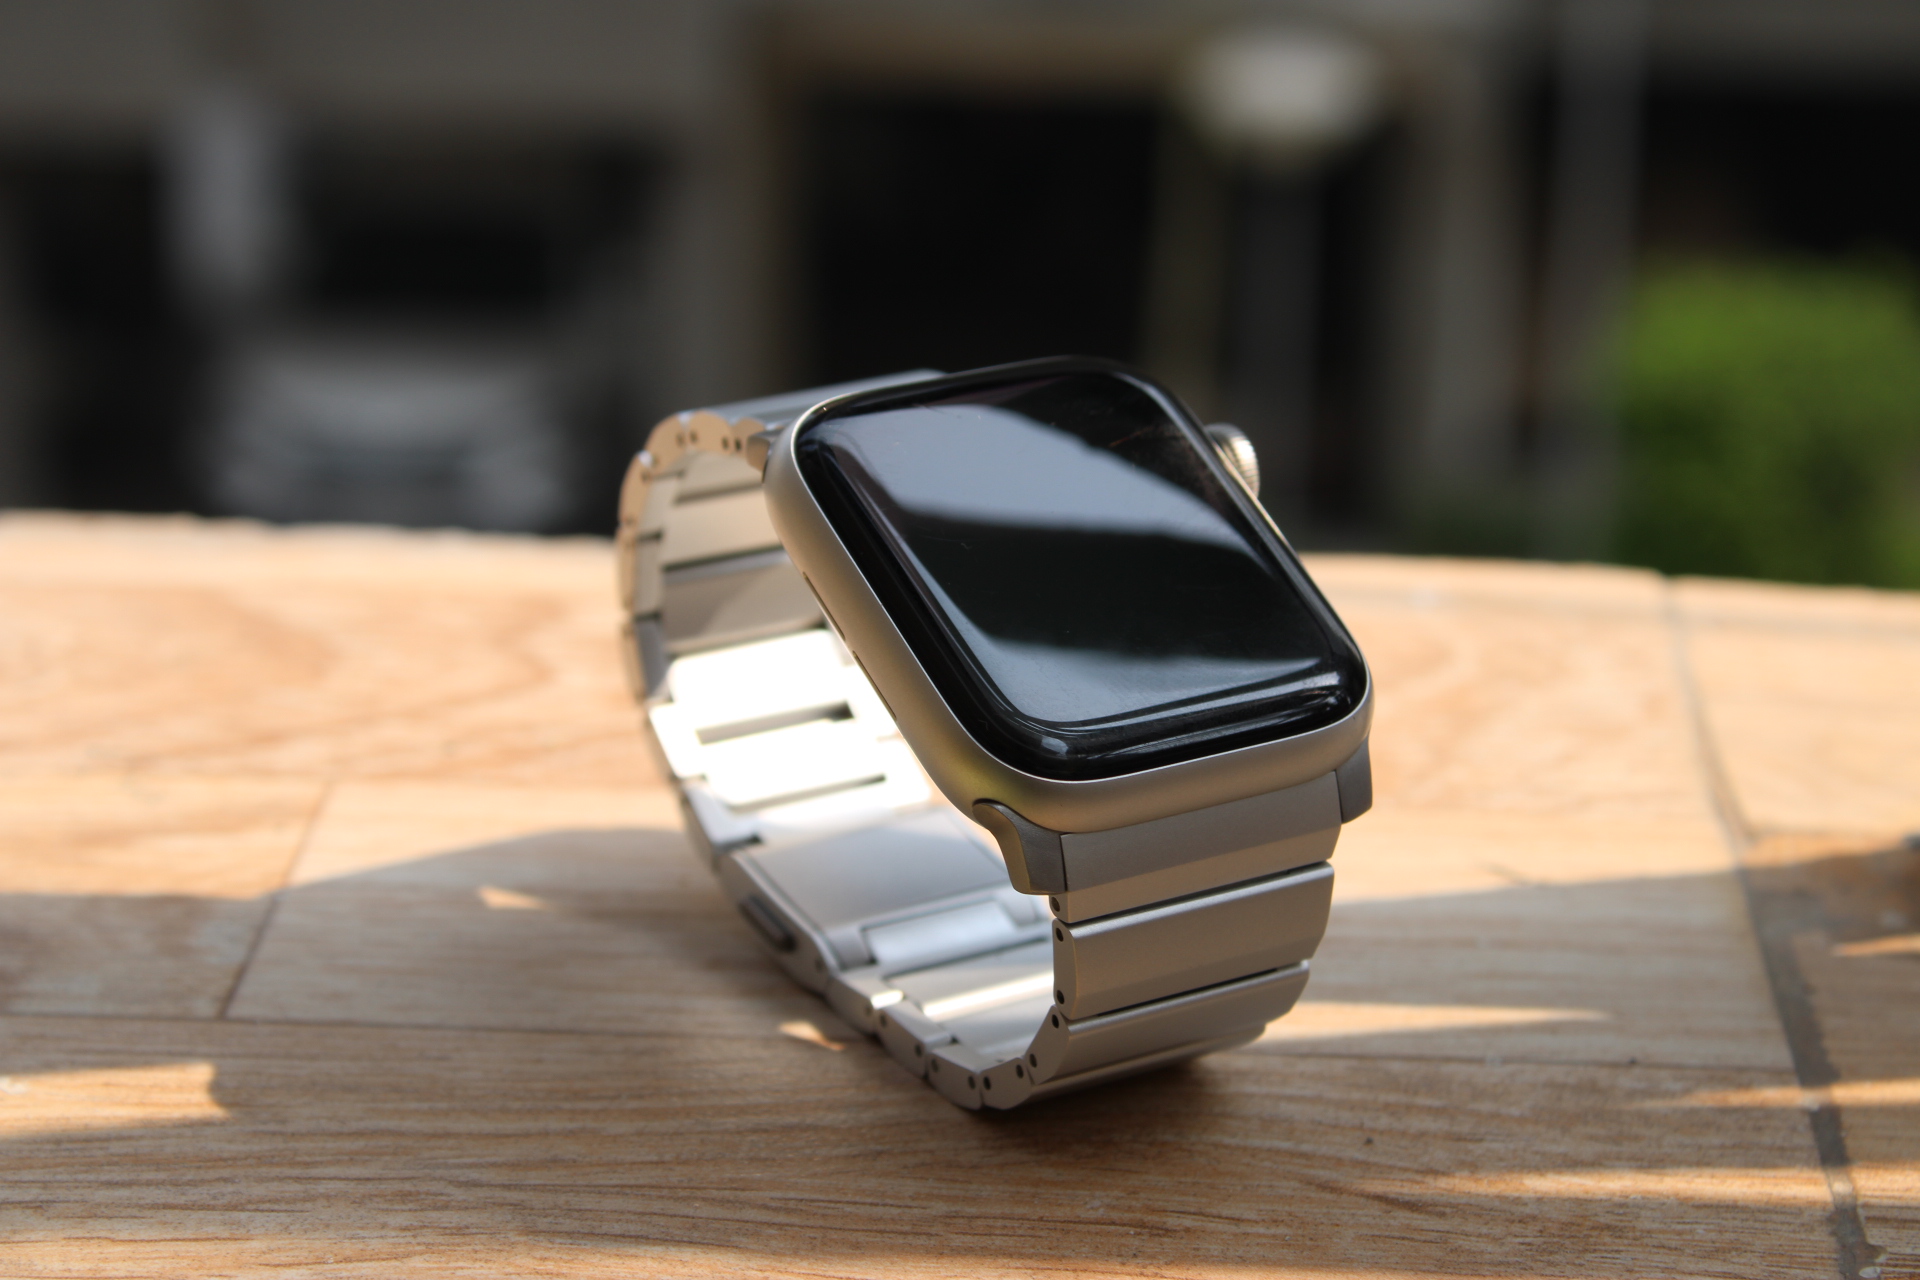 Bracelet stack + L.V. Apple watch band